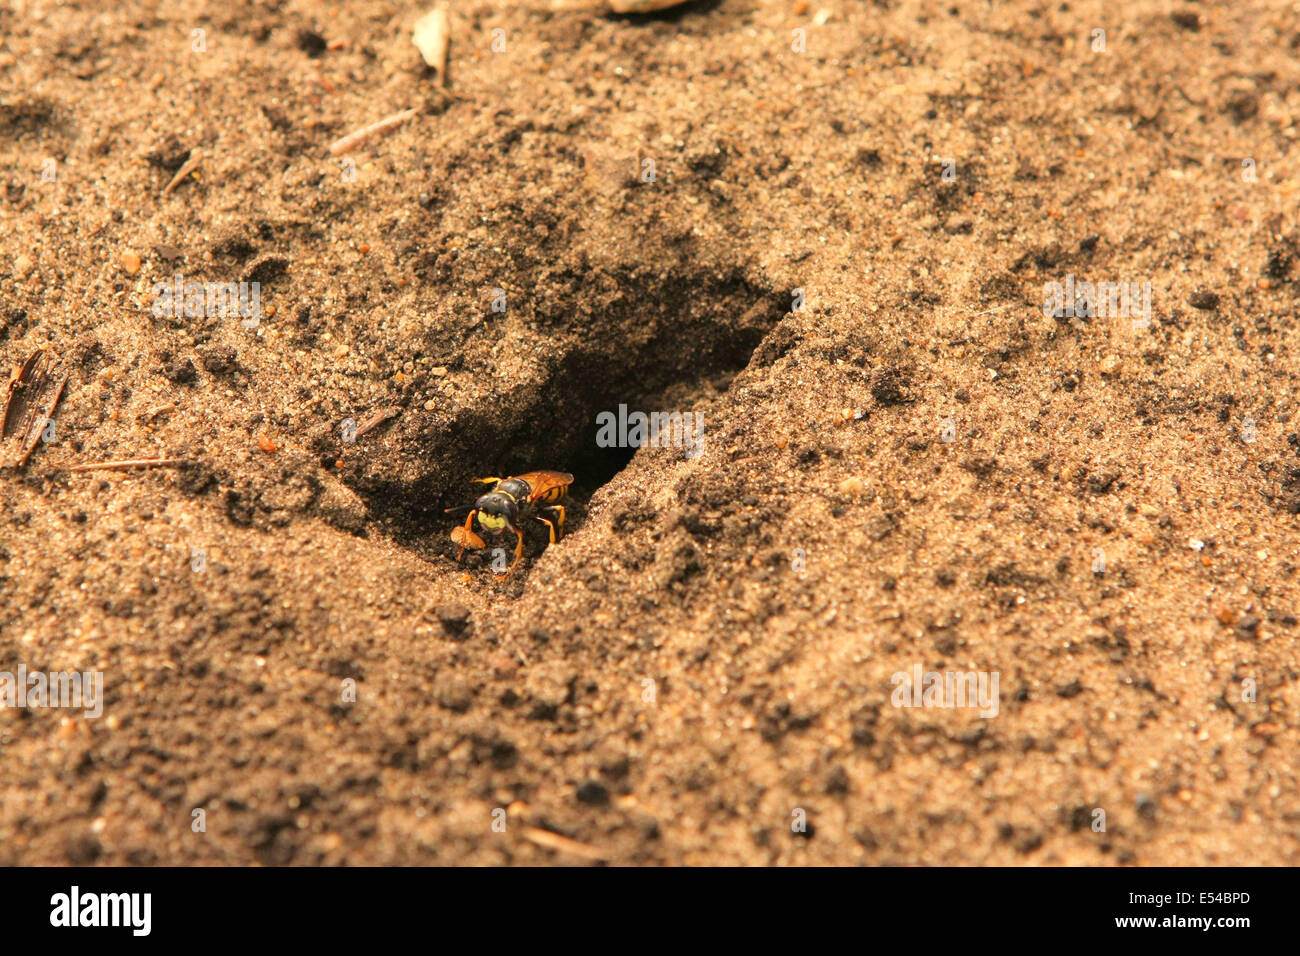 Beewolf, Philanthus triangulum, emerging from its burrow Stock Photo